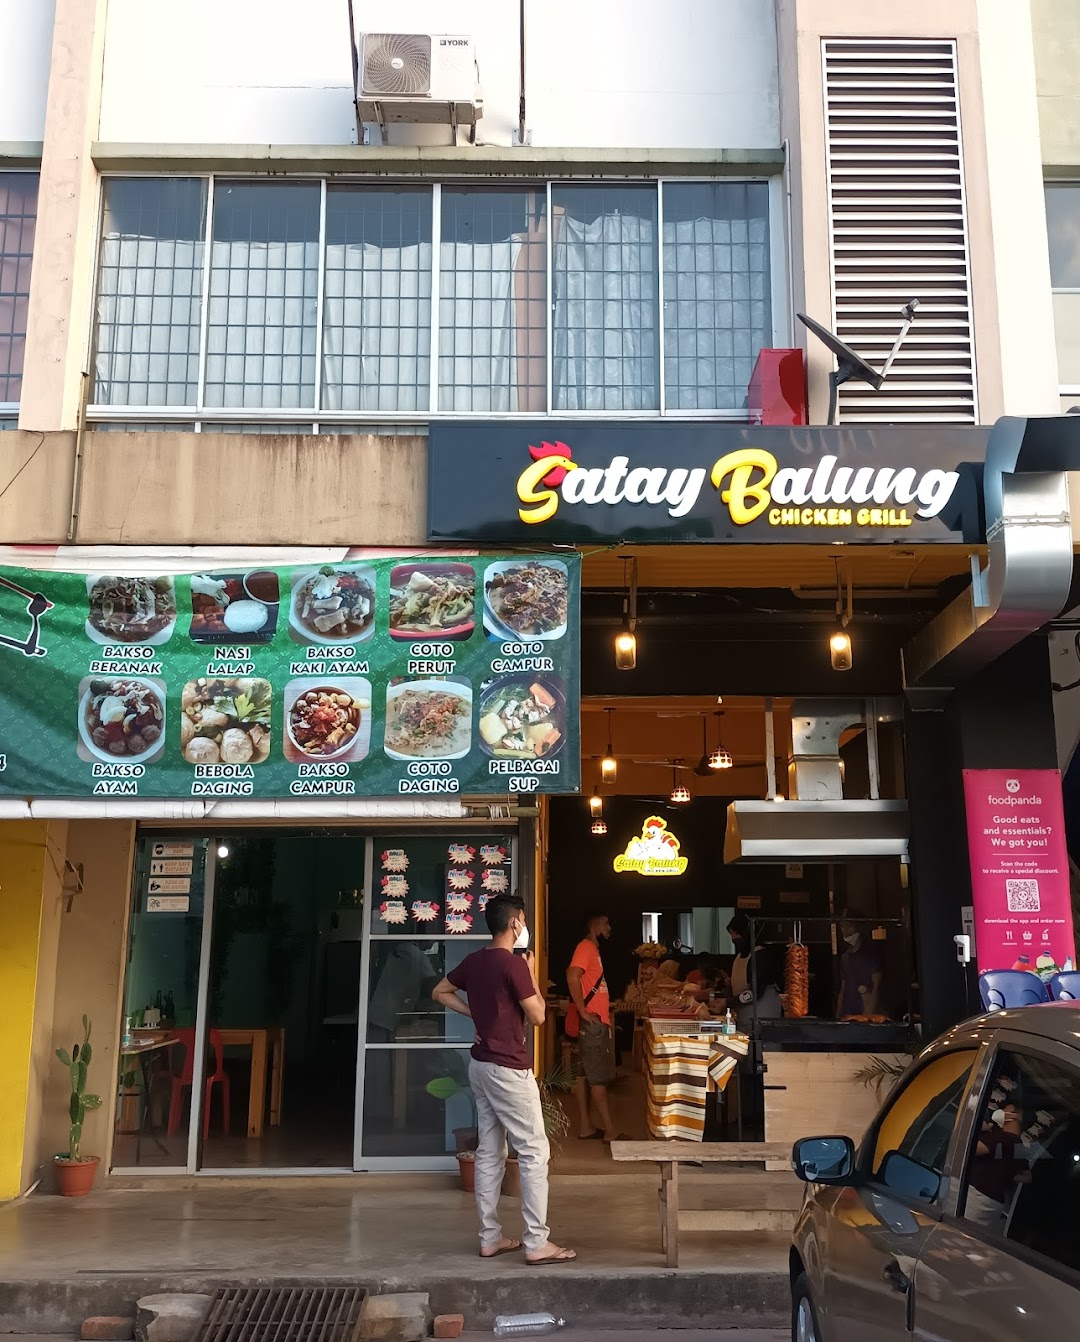 Satay Balung Chicken grilL